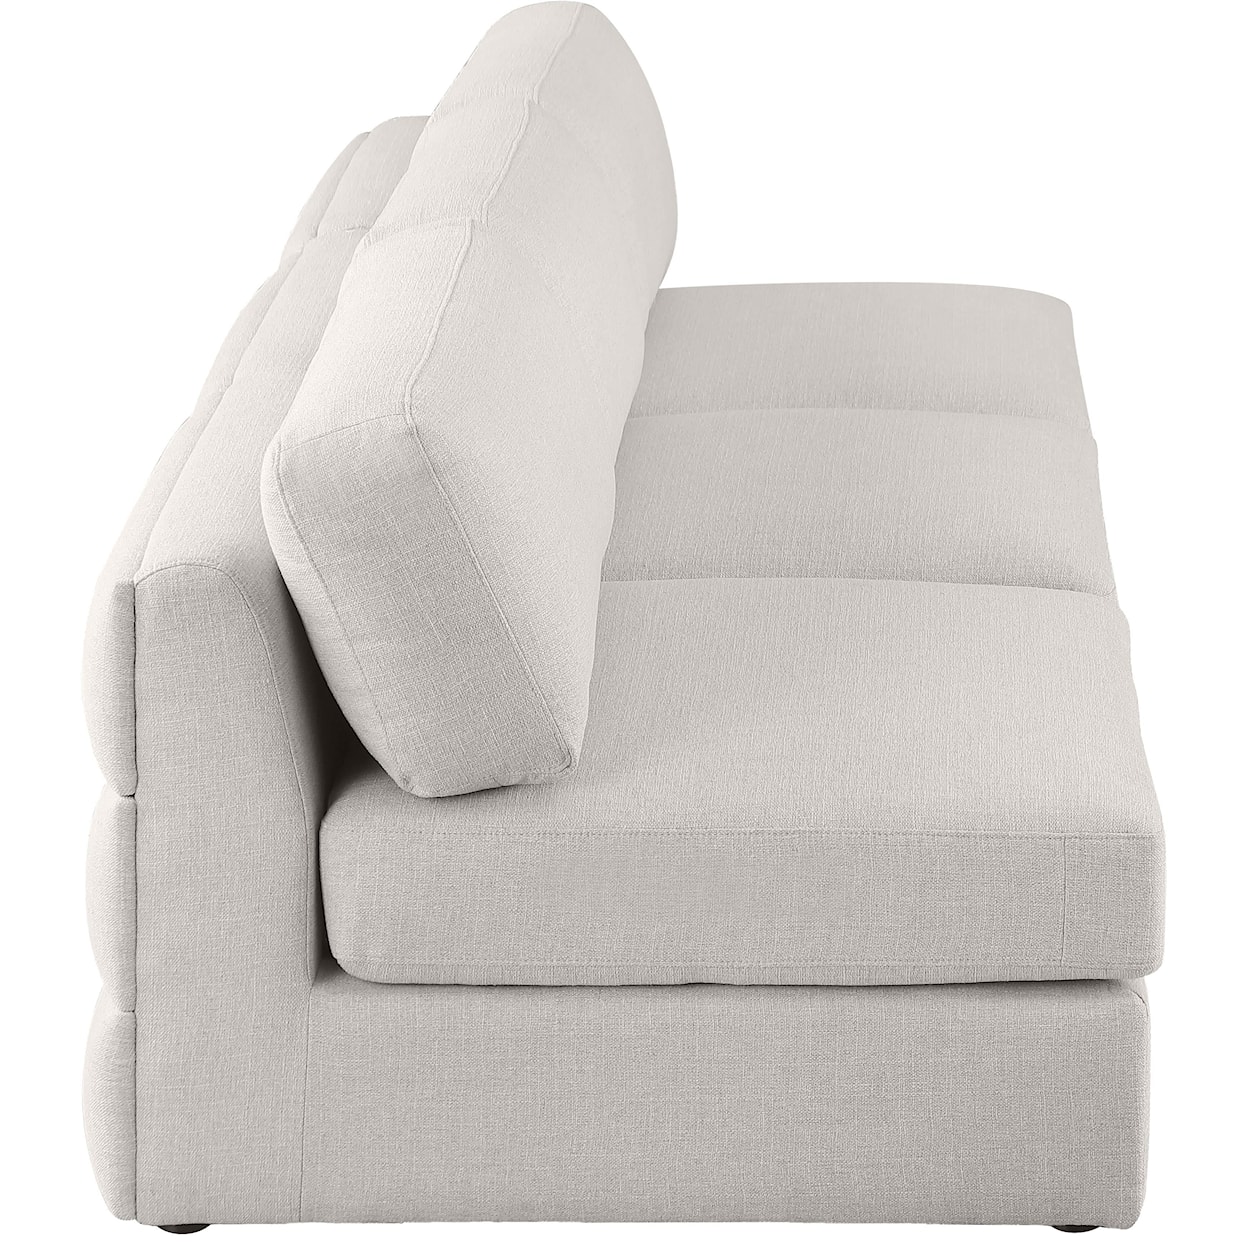 Meridian Furniture Beckham Modular Sofa